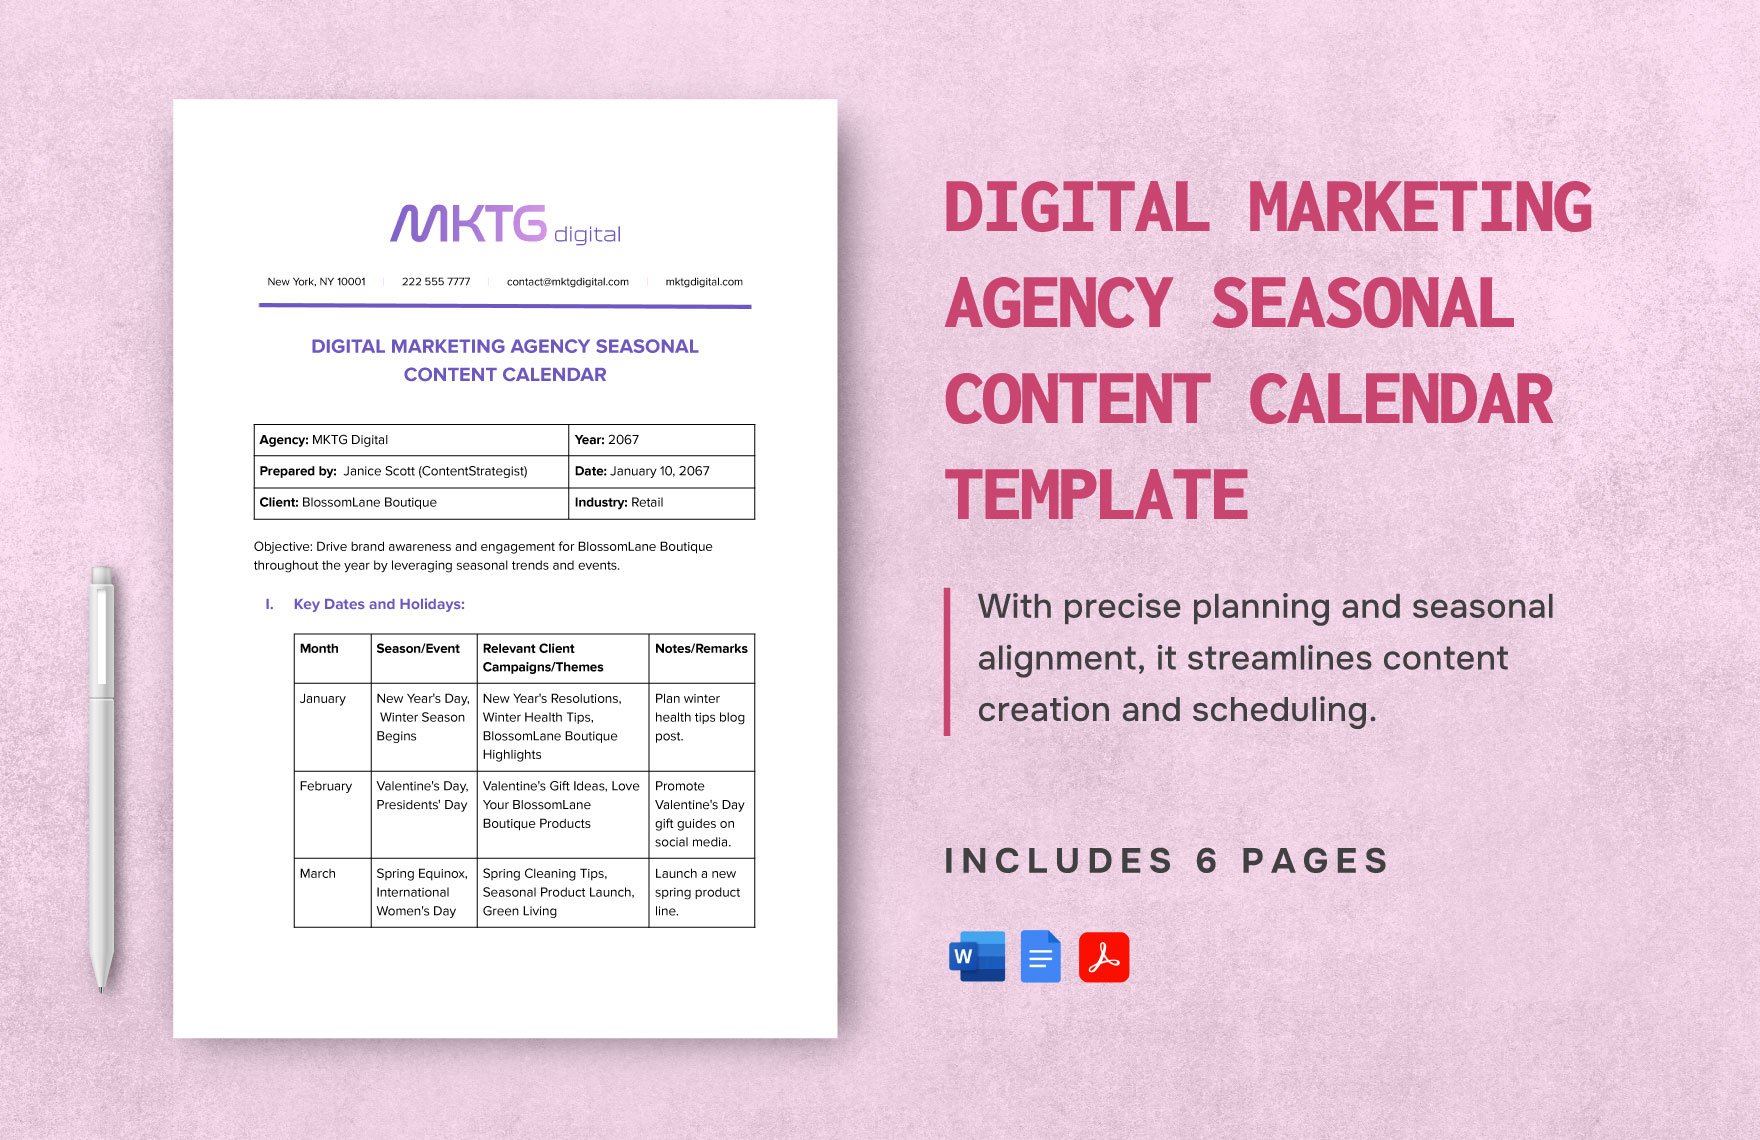 Digital Marketing Agency Seasonal Content Calendar Template in Word, Google Docs, PDF